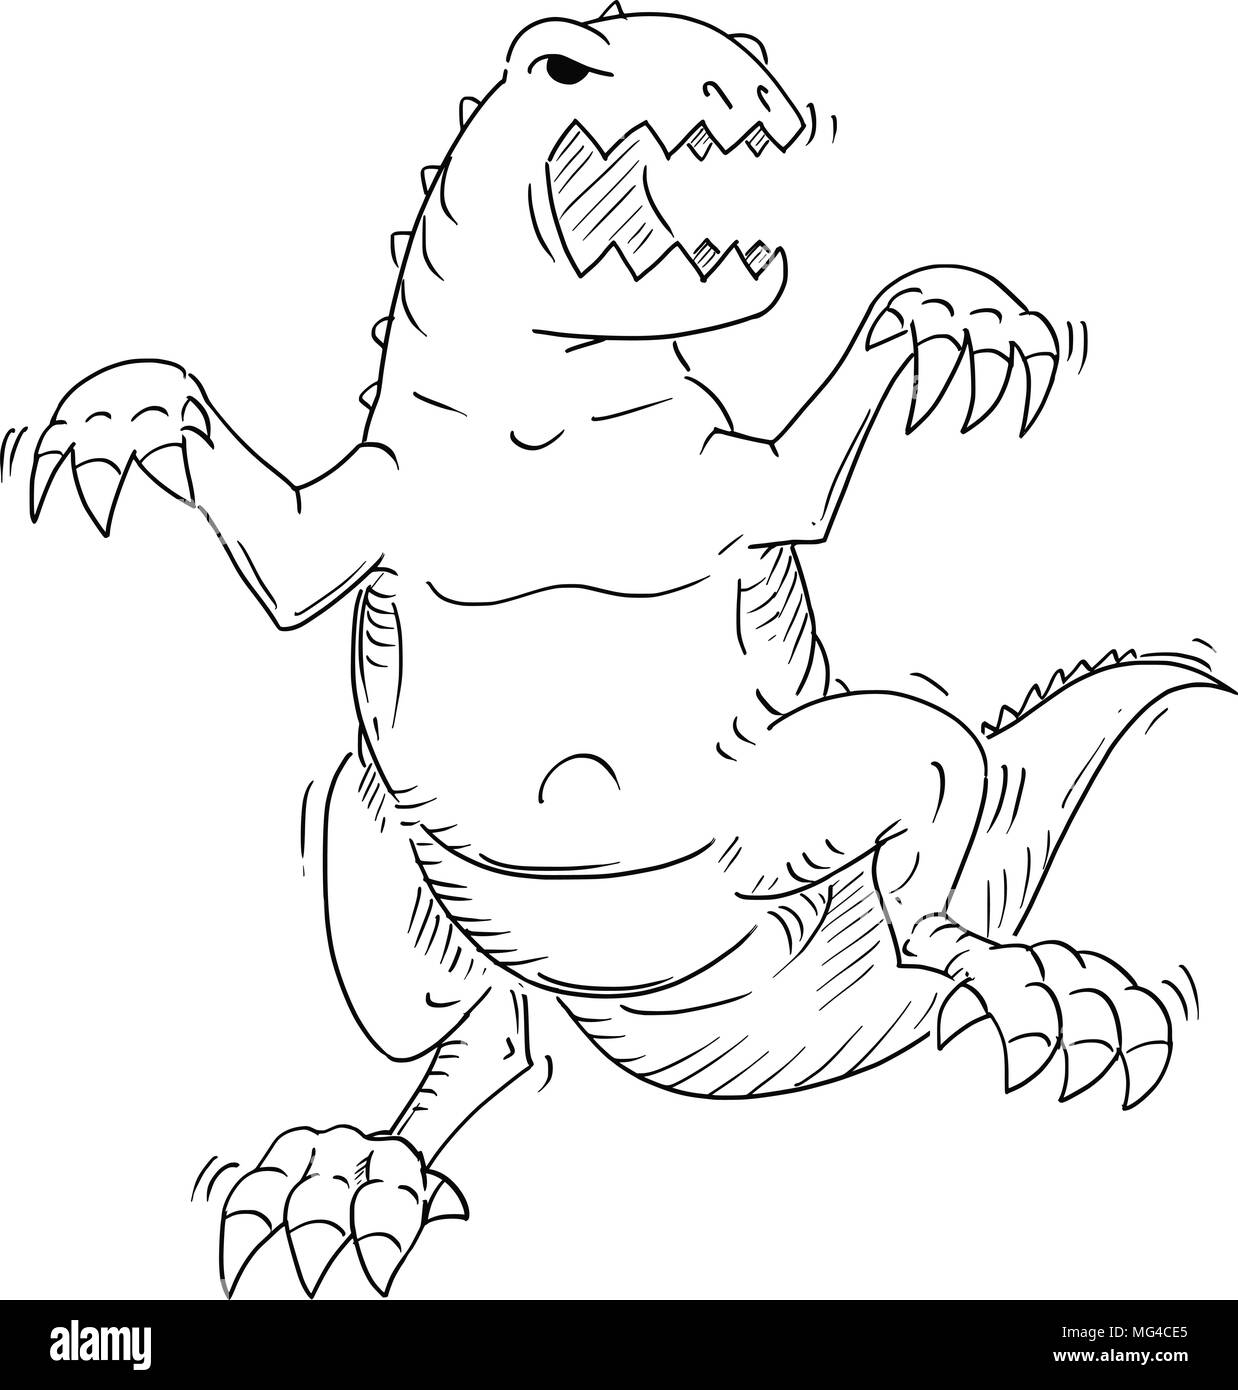 Caricature de dinosaure Tyrannosaure Monster ou créature Godzilla Illustration de Vecteur